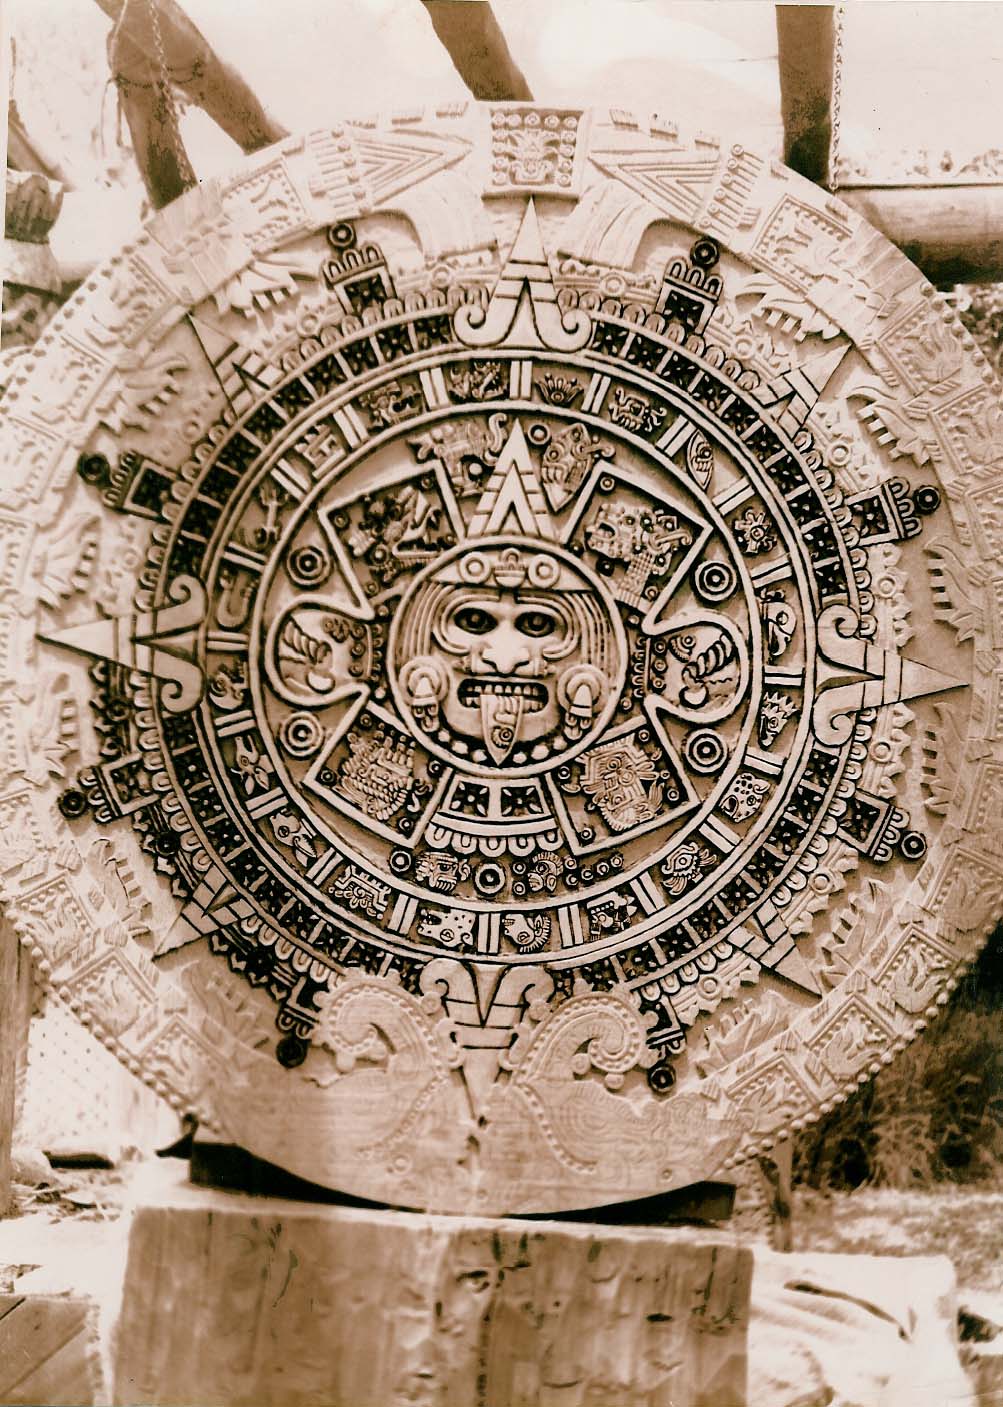 Image For > Aztec Calendar Wallpapers